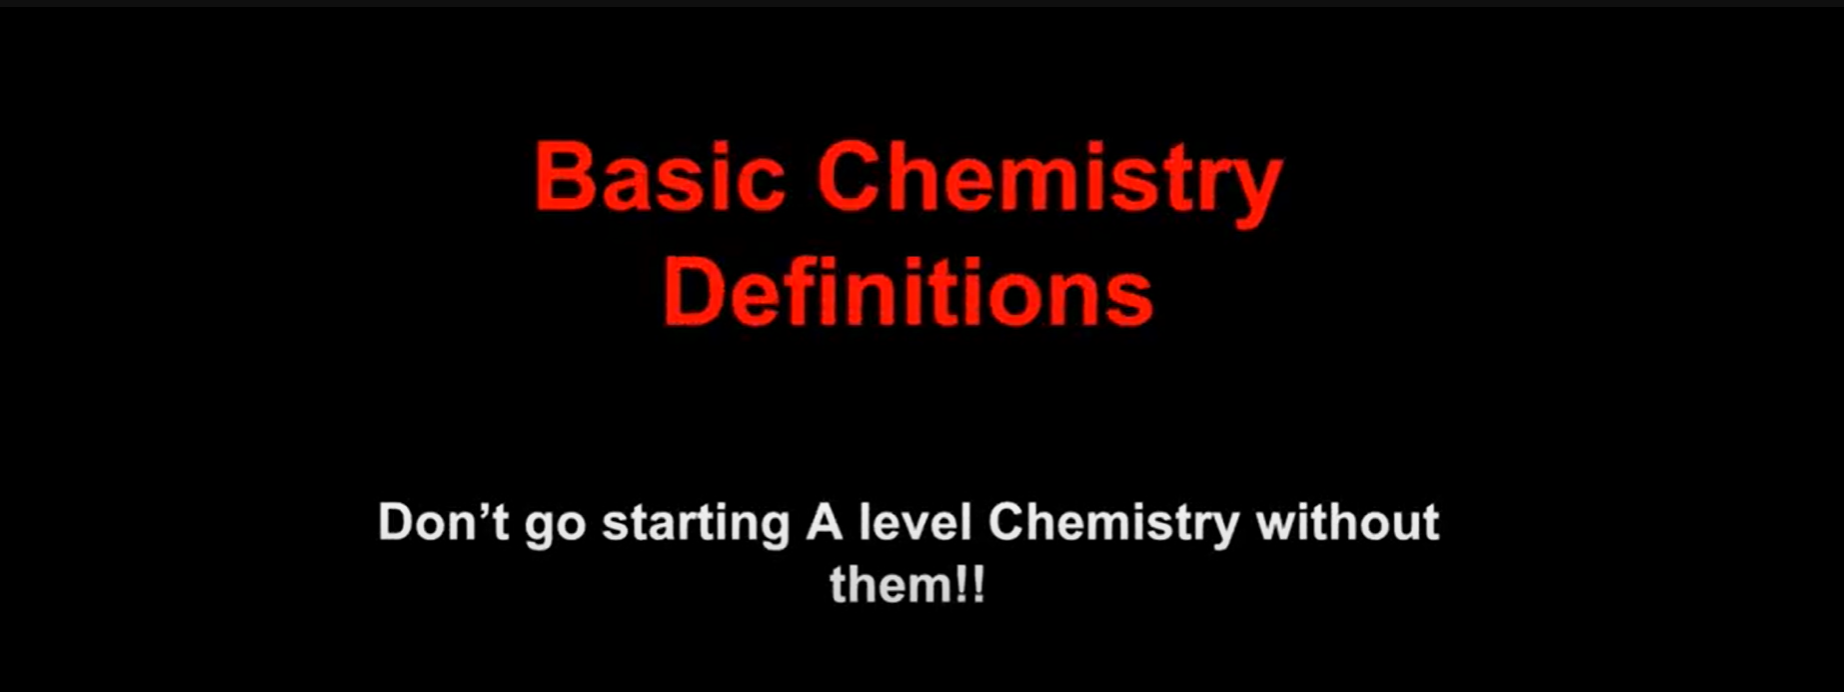 Basic Chemistry Definitions